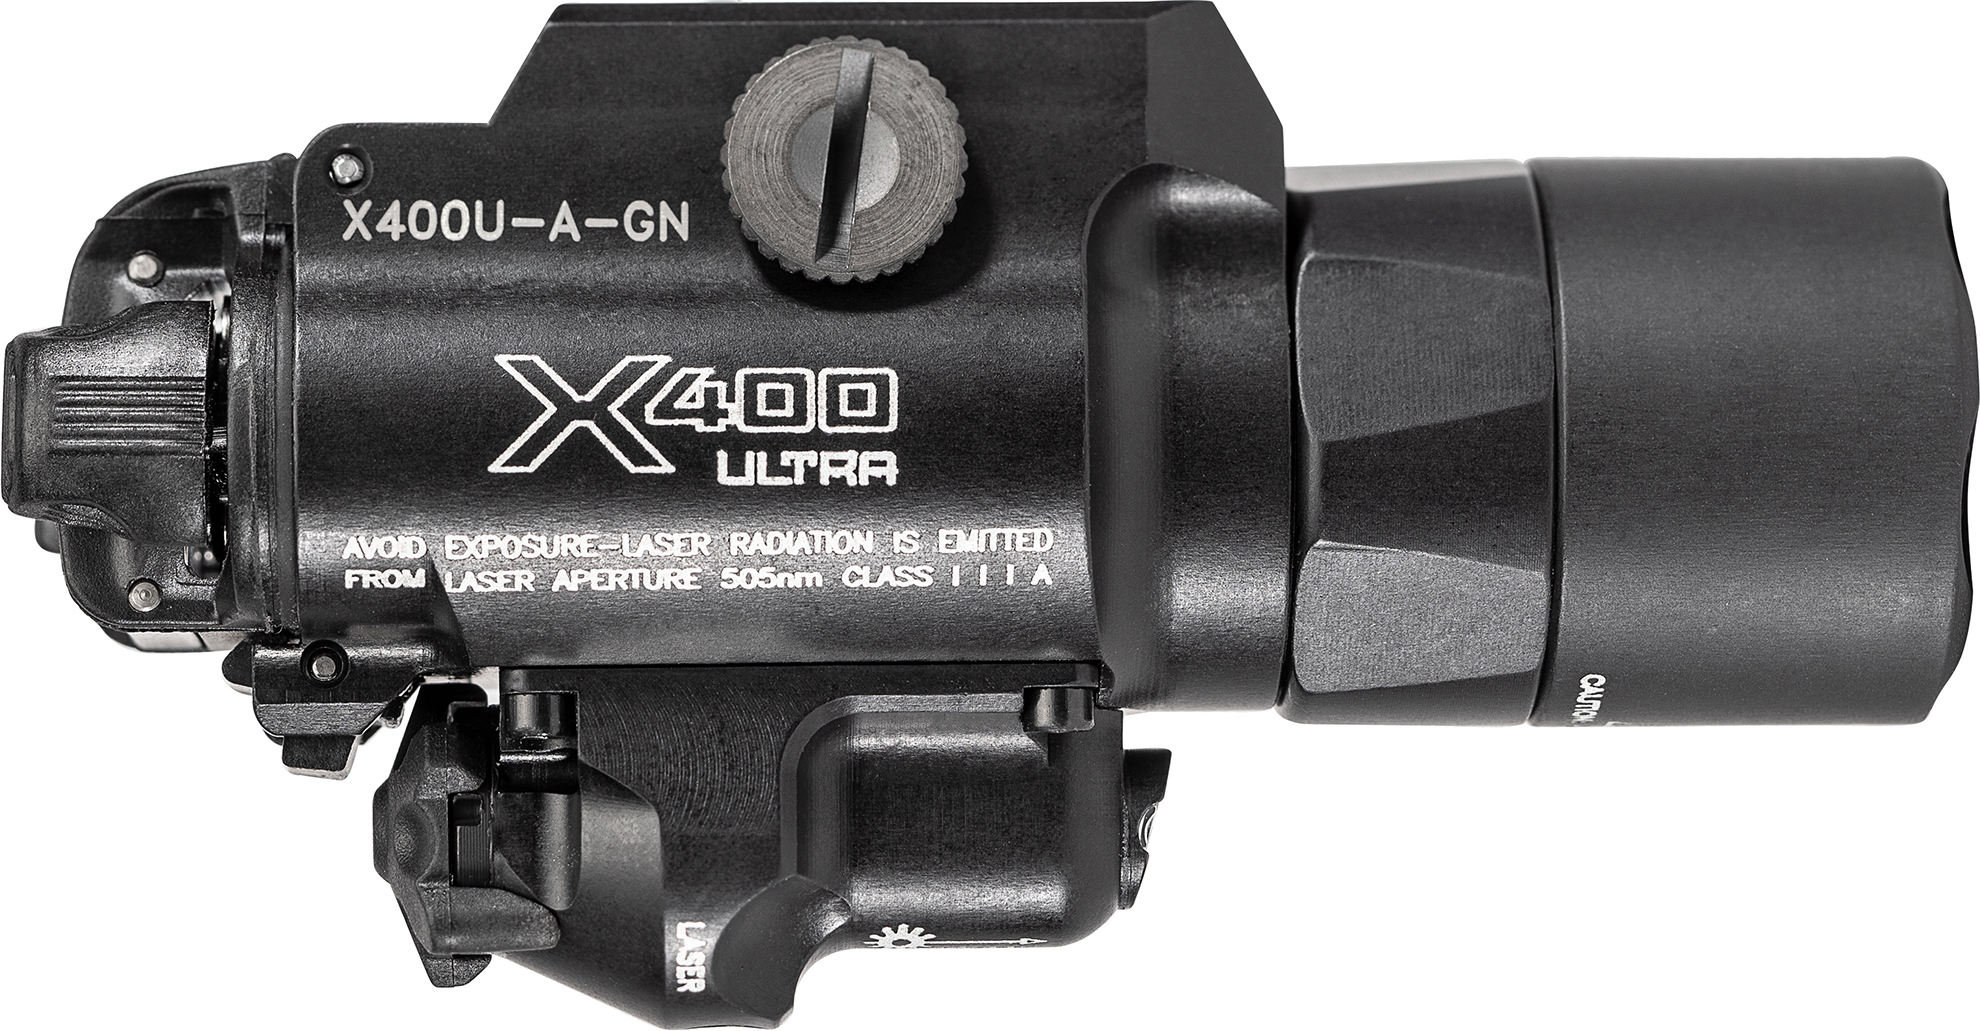 SureFire X400 laser light right side profile